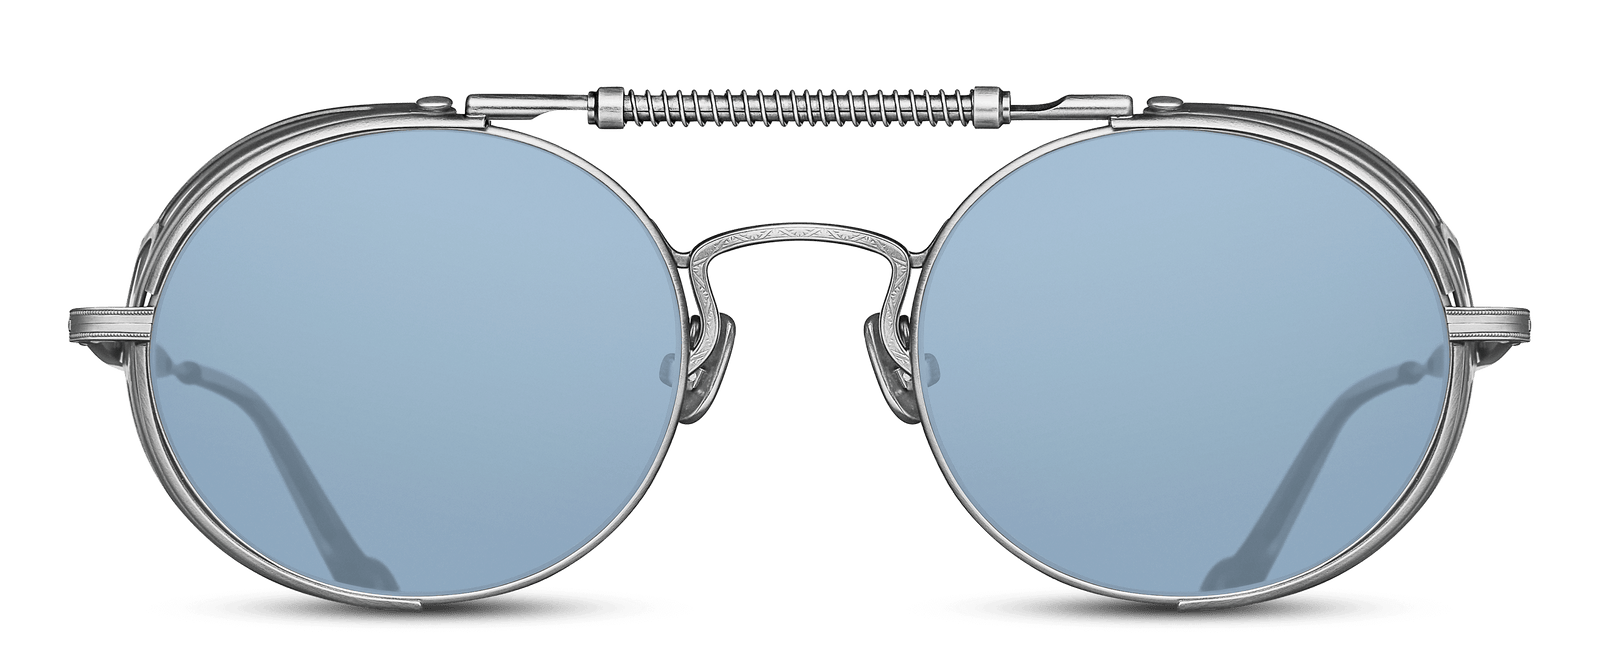 Matsuda Official | 2809H-V2 - Terminator Sunglasses - Limited Edition